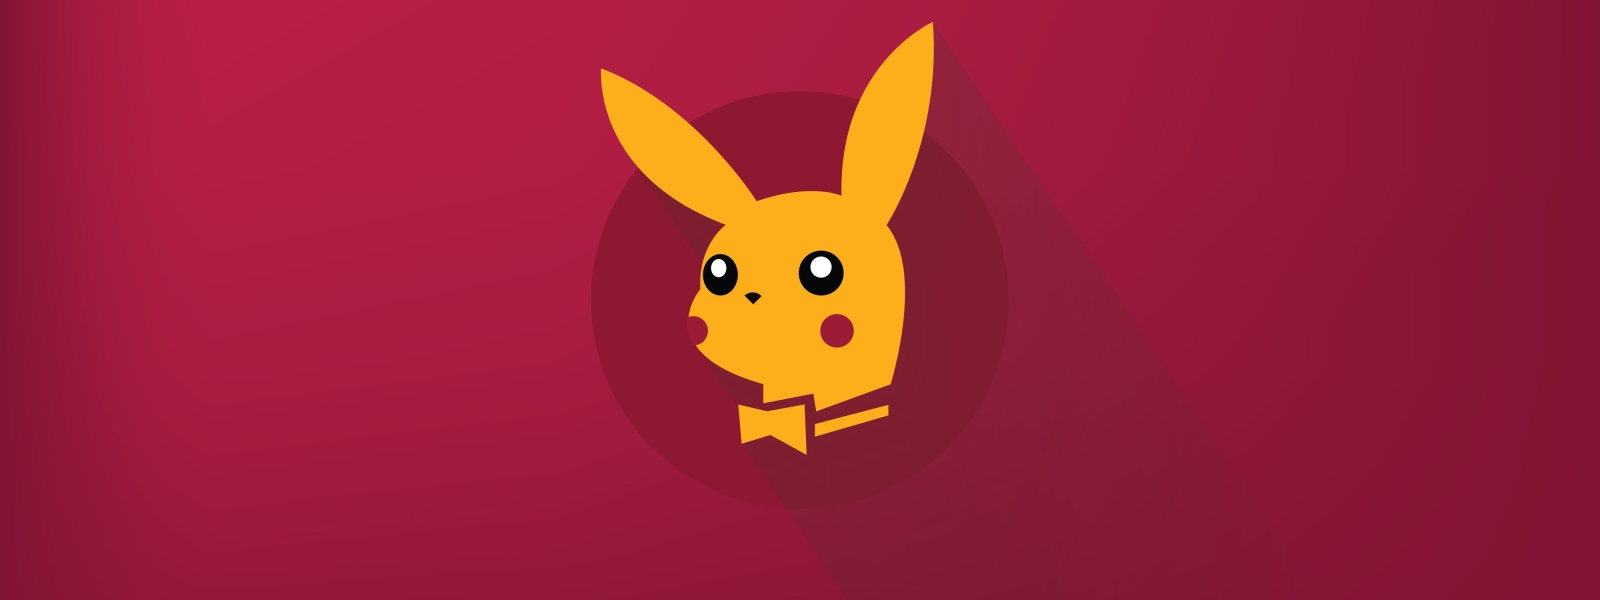 1600x600 Pikachu Minimalist Pokémon 1600x600 Resolution Wallpaper, HD  Minimalist 4K Wallpapers, Images, Photos and Background - Wallpapers Den